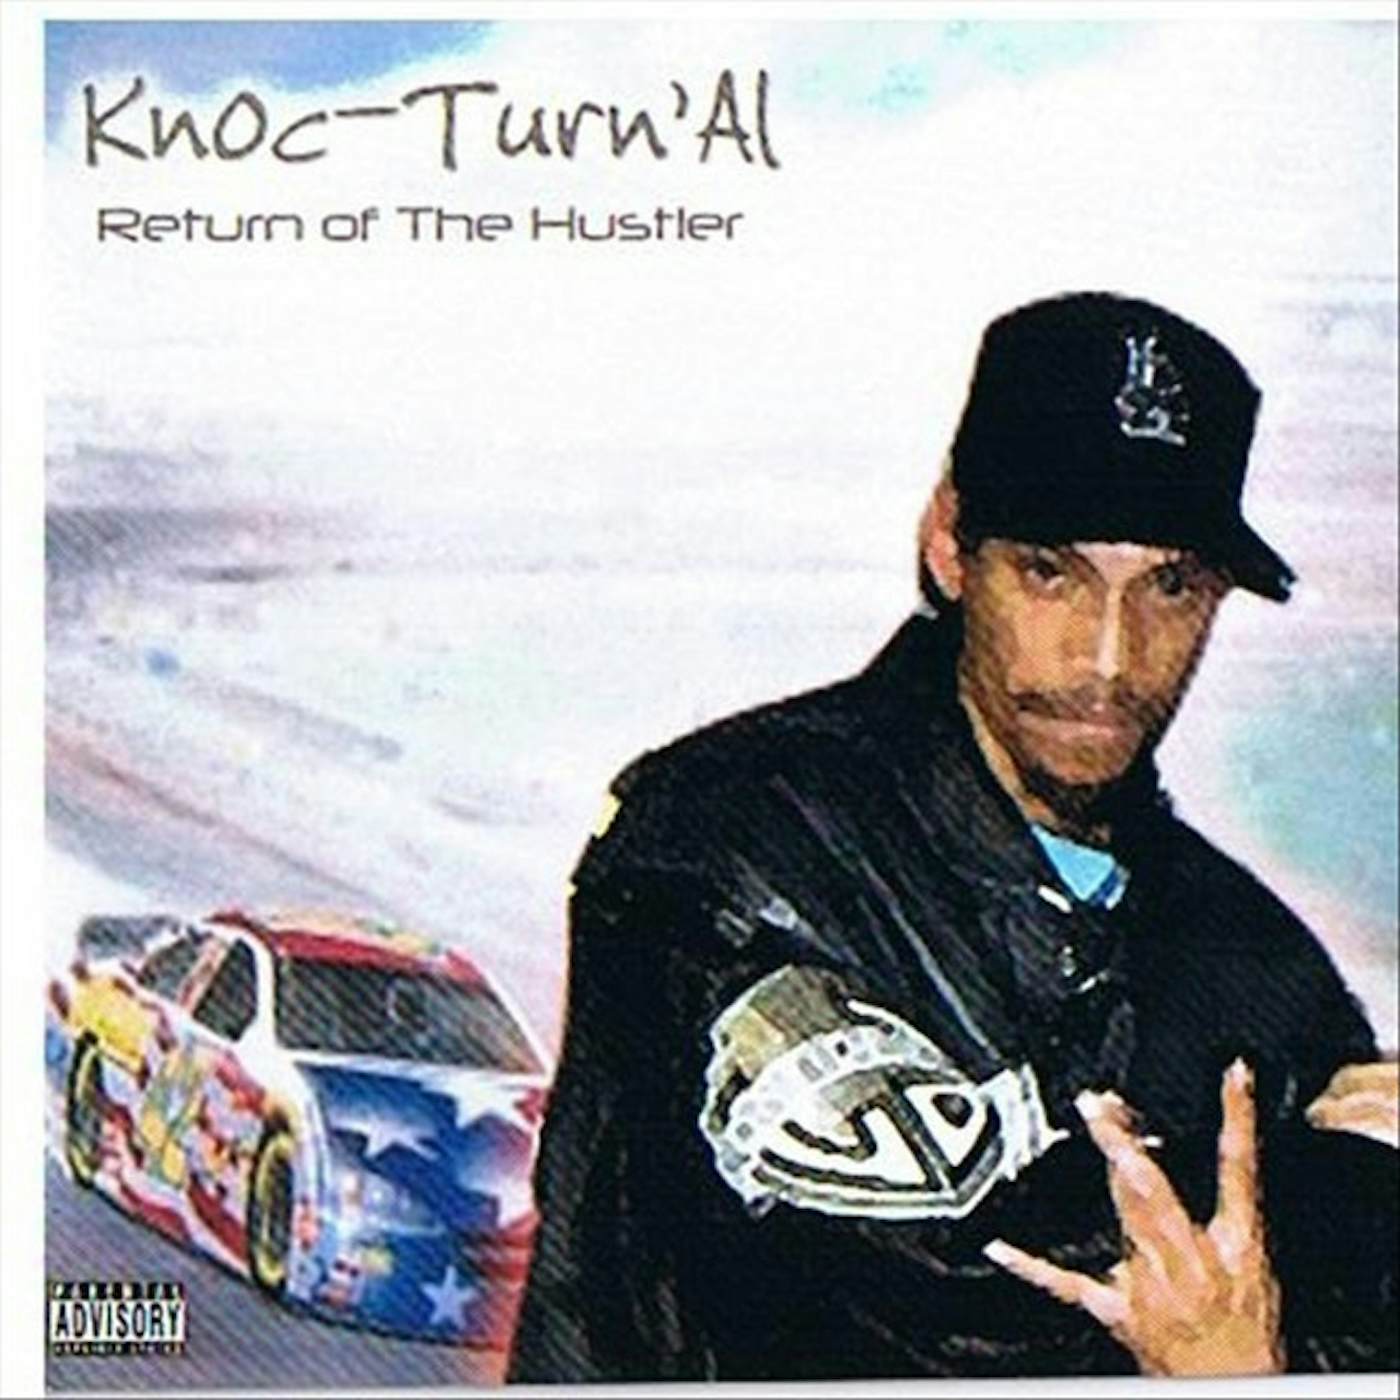 Knoc-Turn'al RETURN OF THE HUSTLER CD